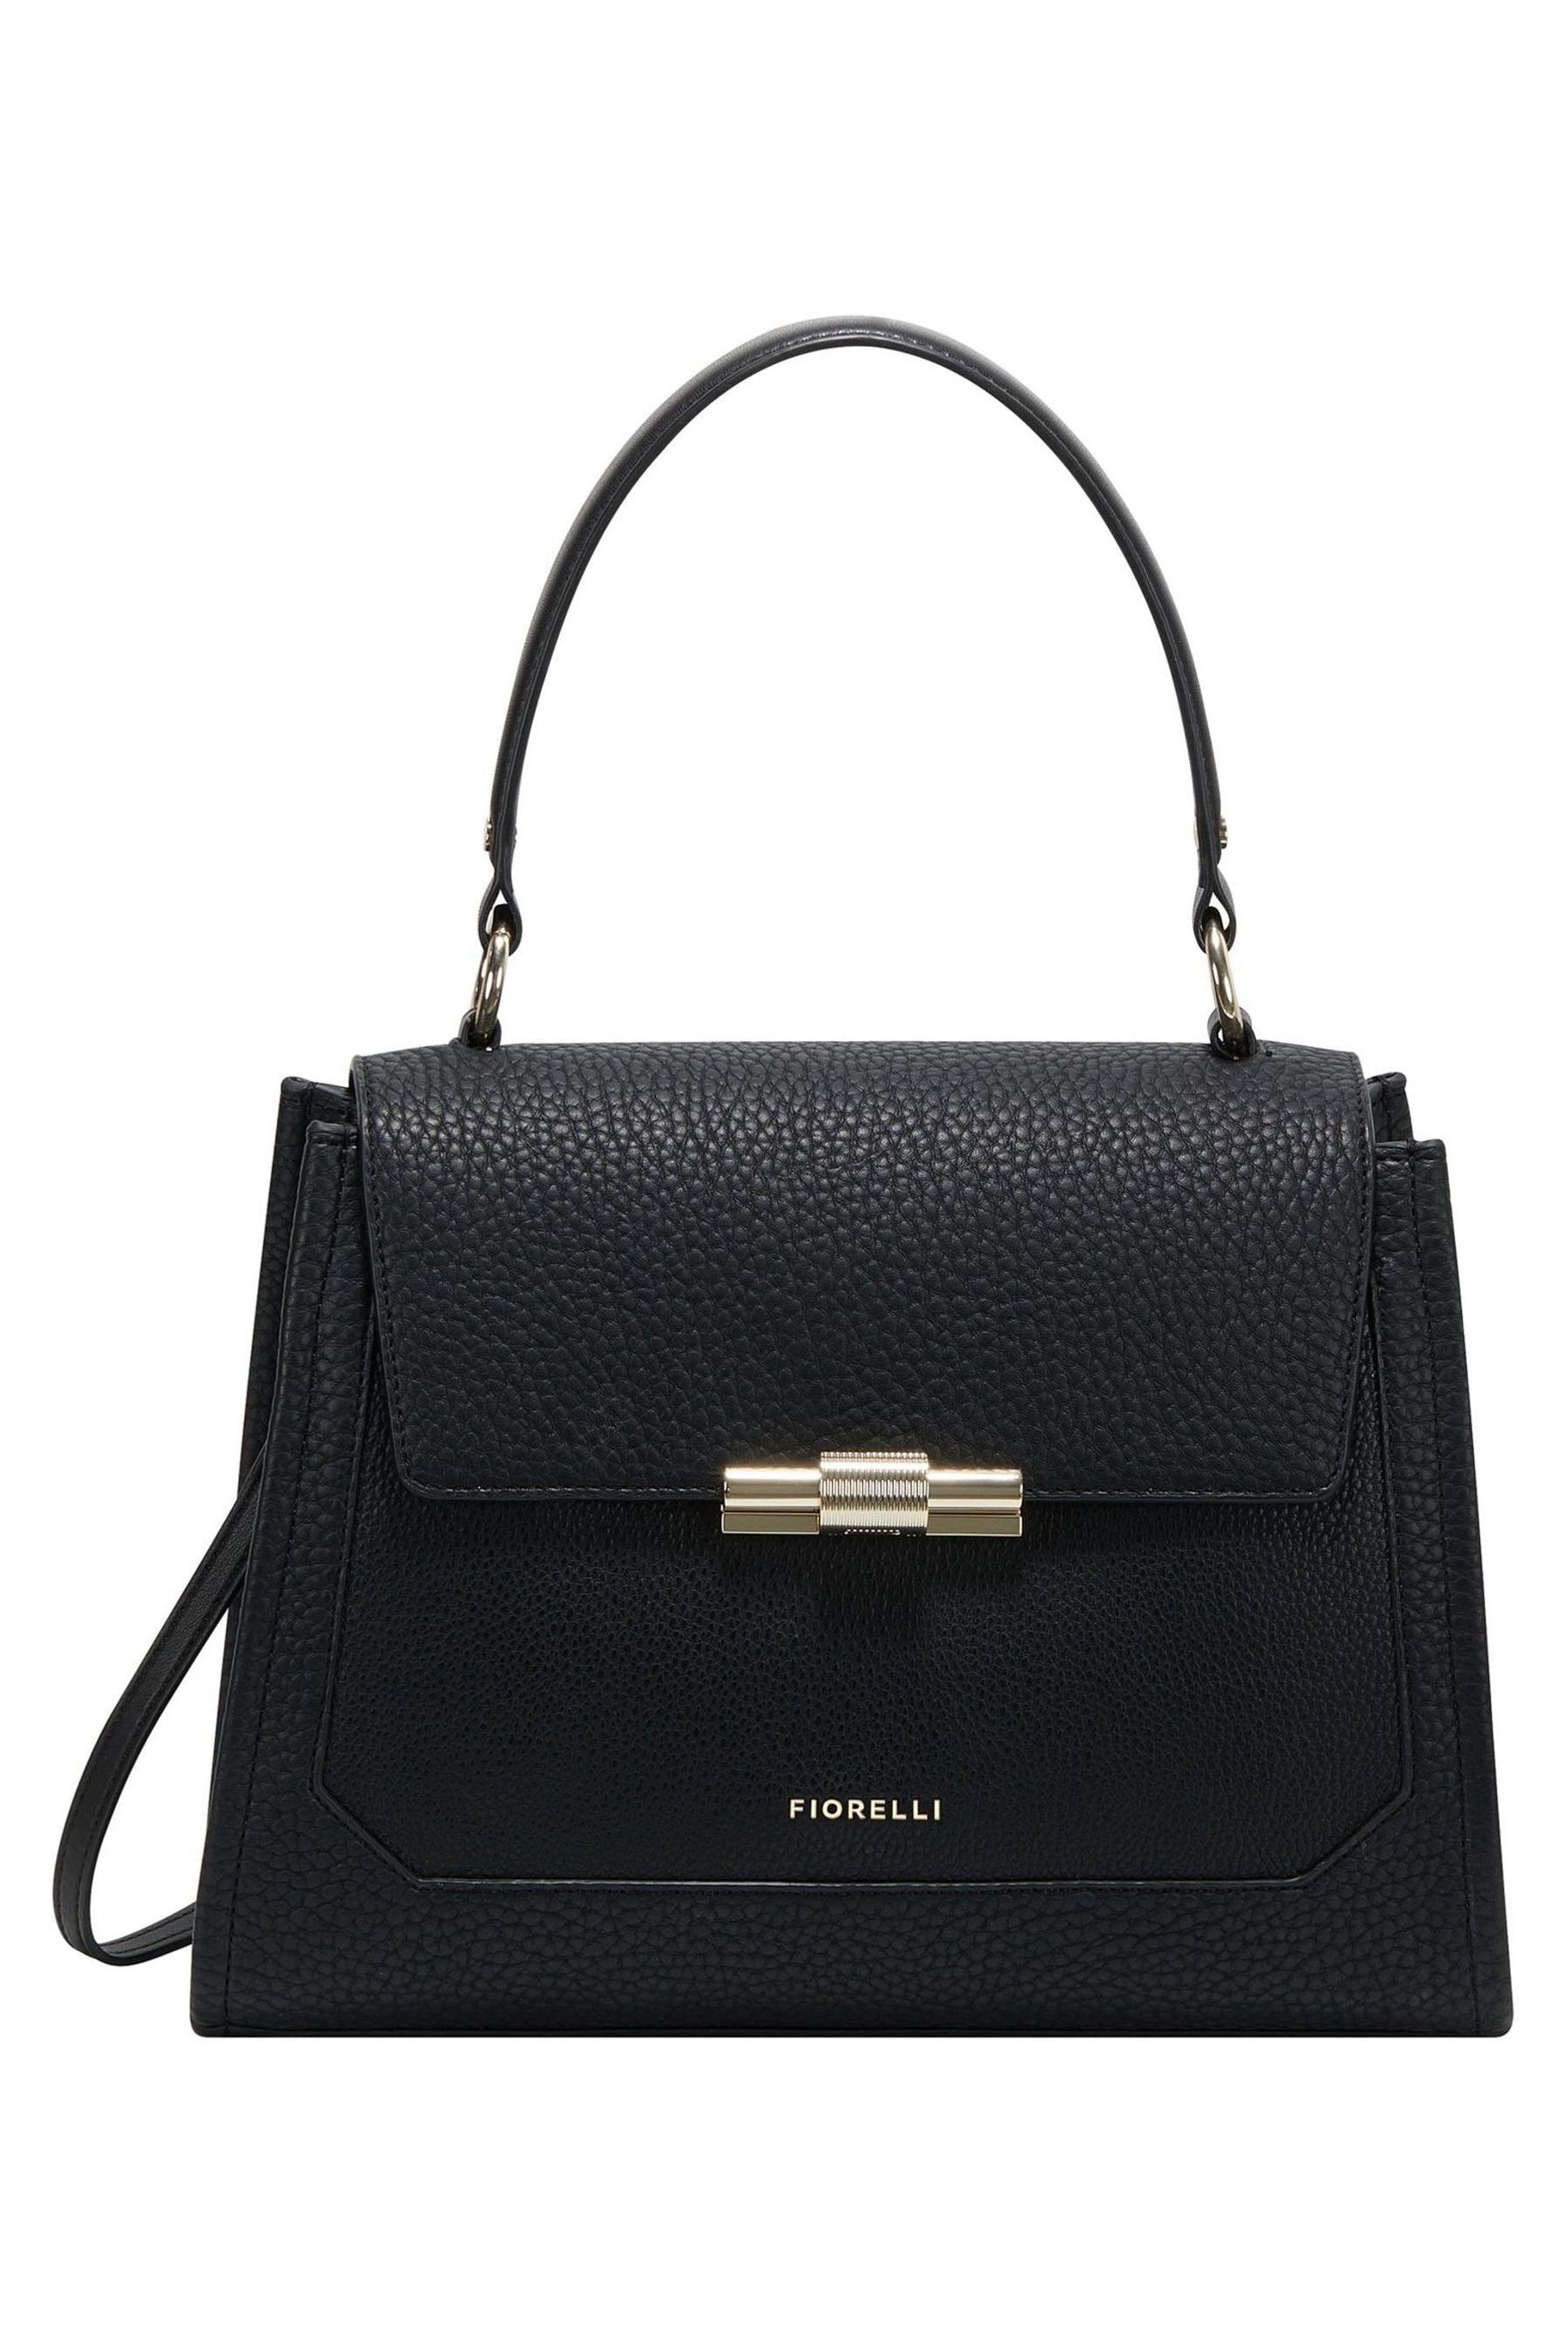 Buy Fiorelli Alda Black Grab Bag from the Next UK online shop